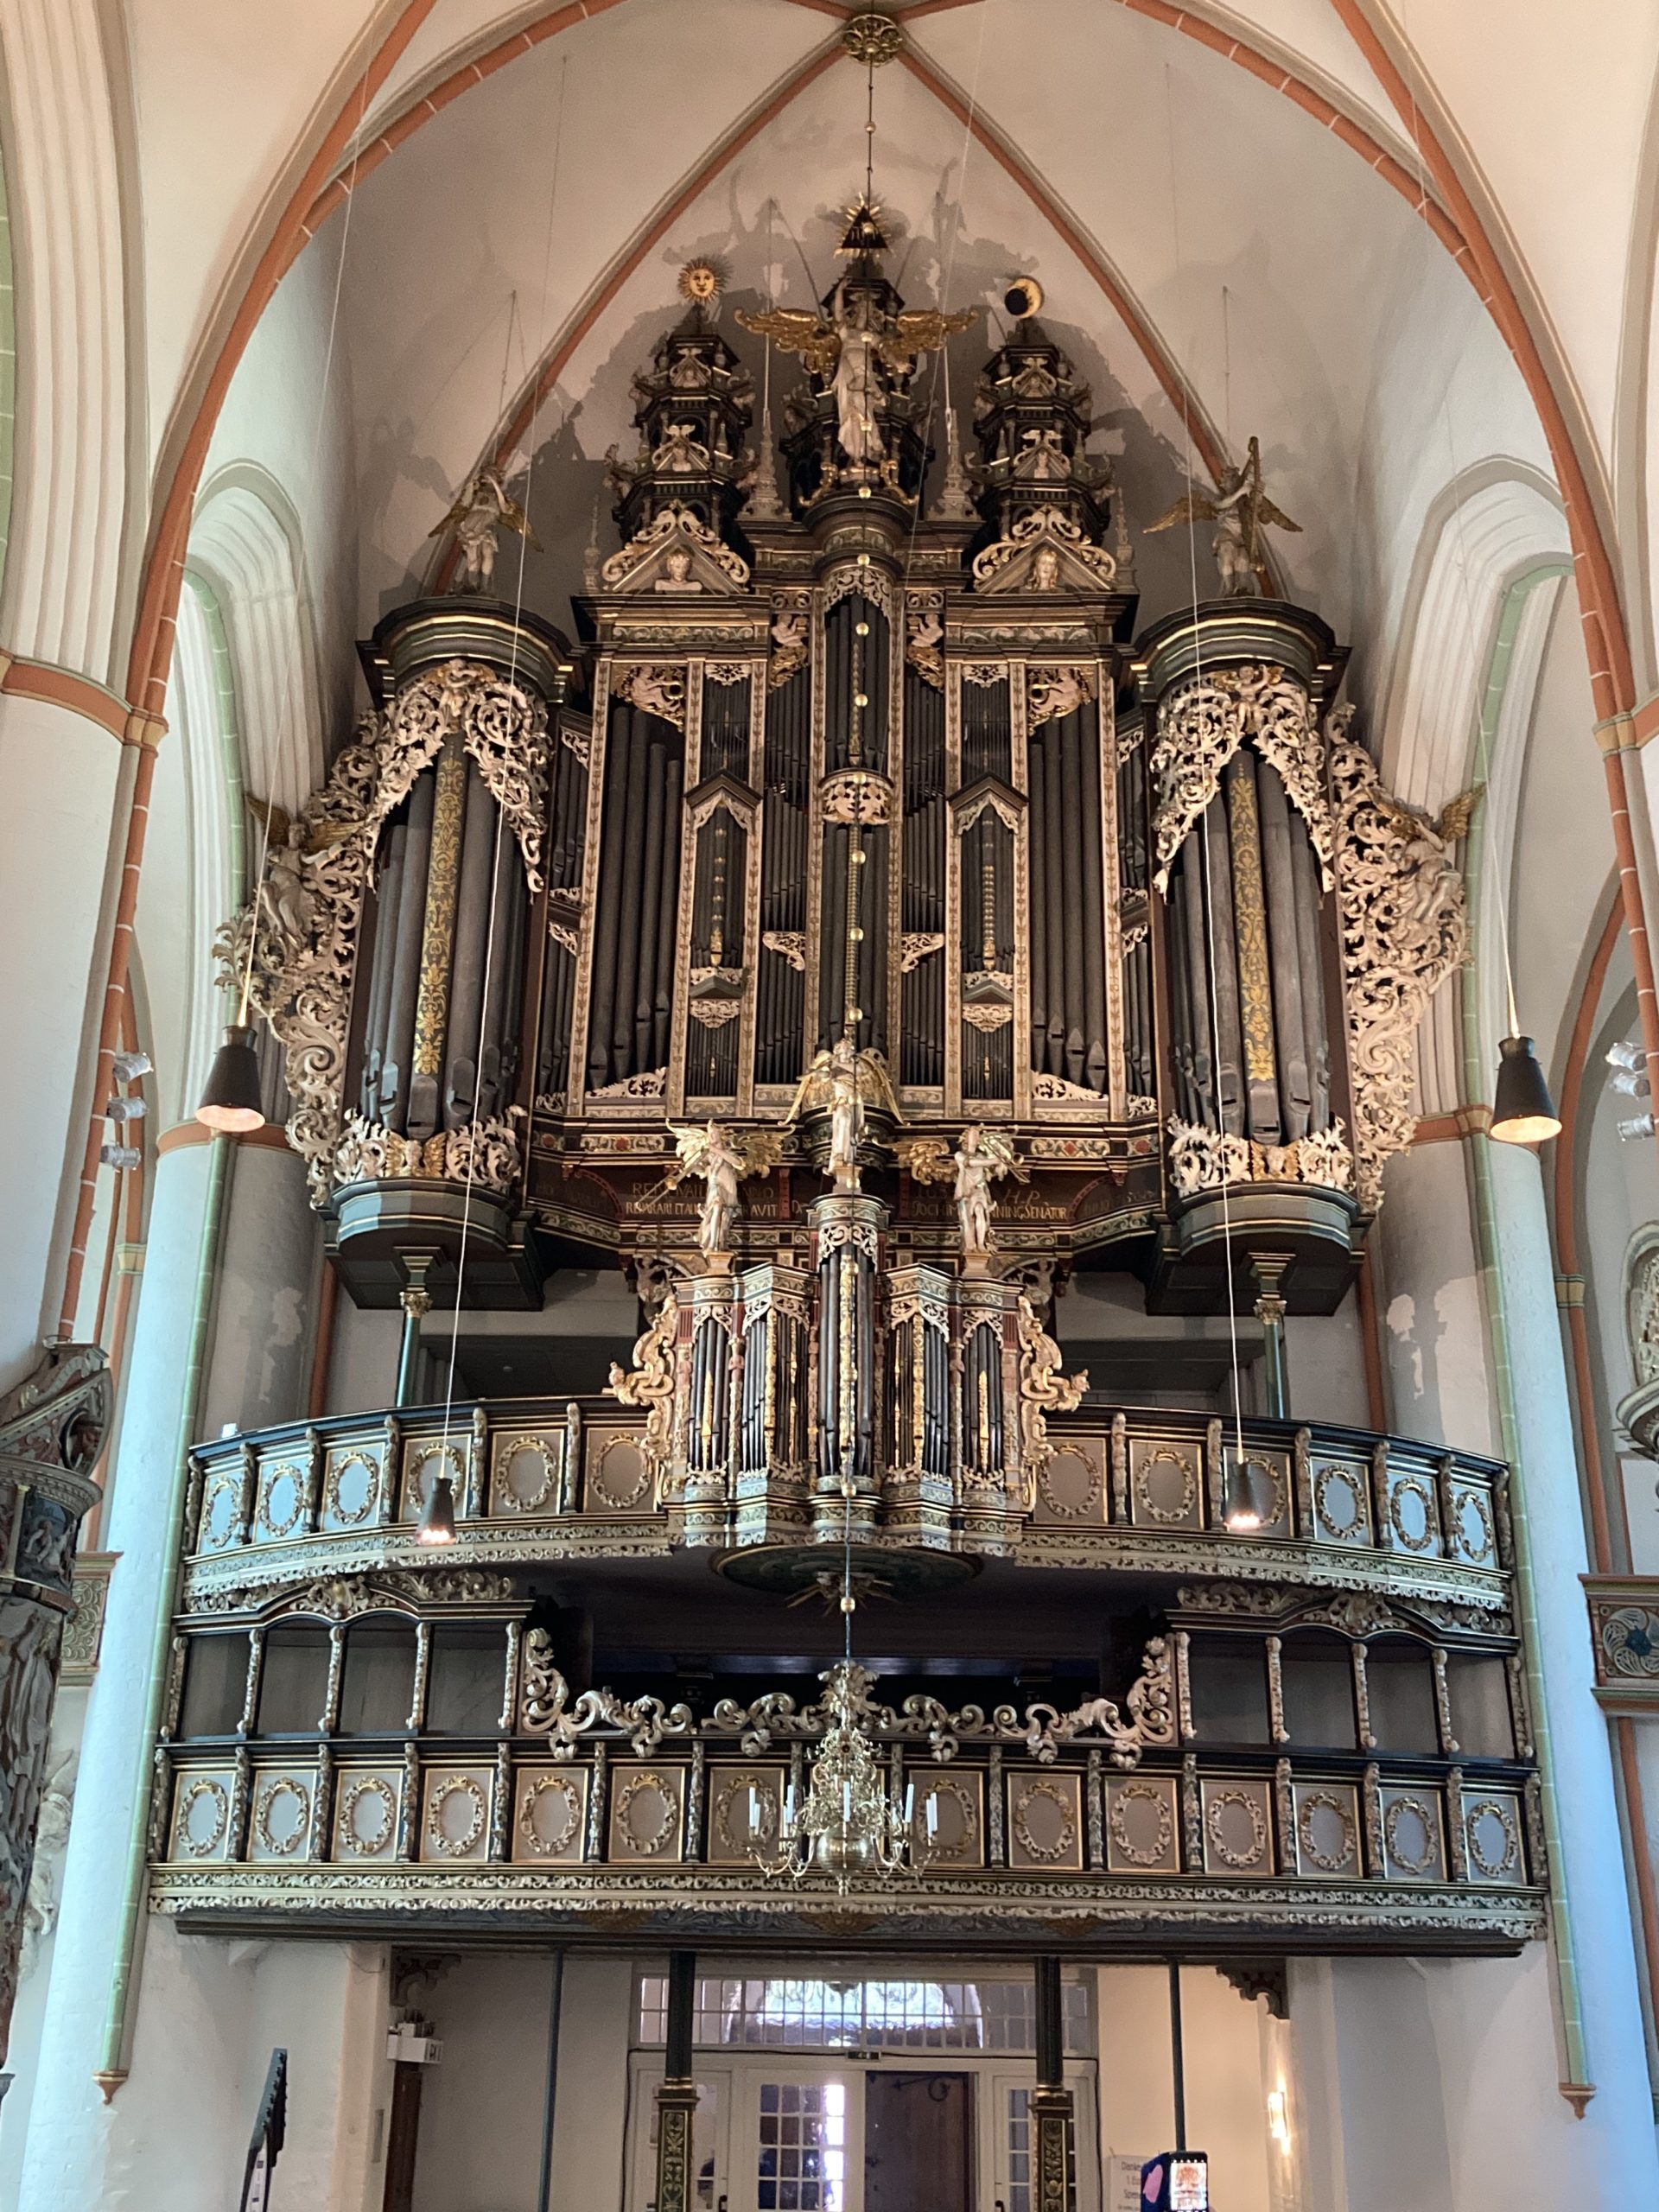 the organ in St Johannis